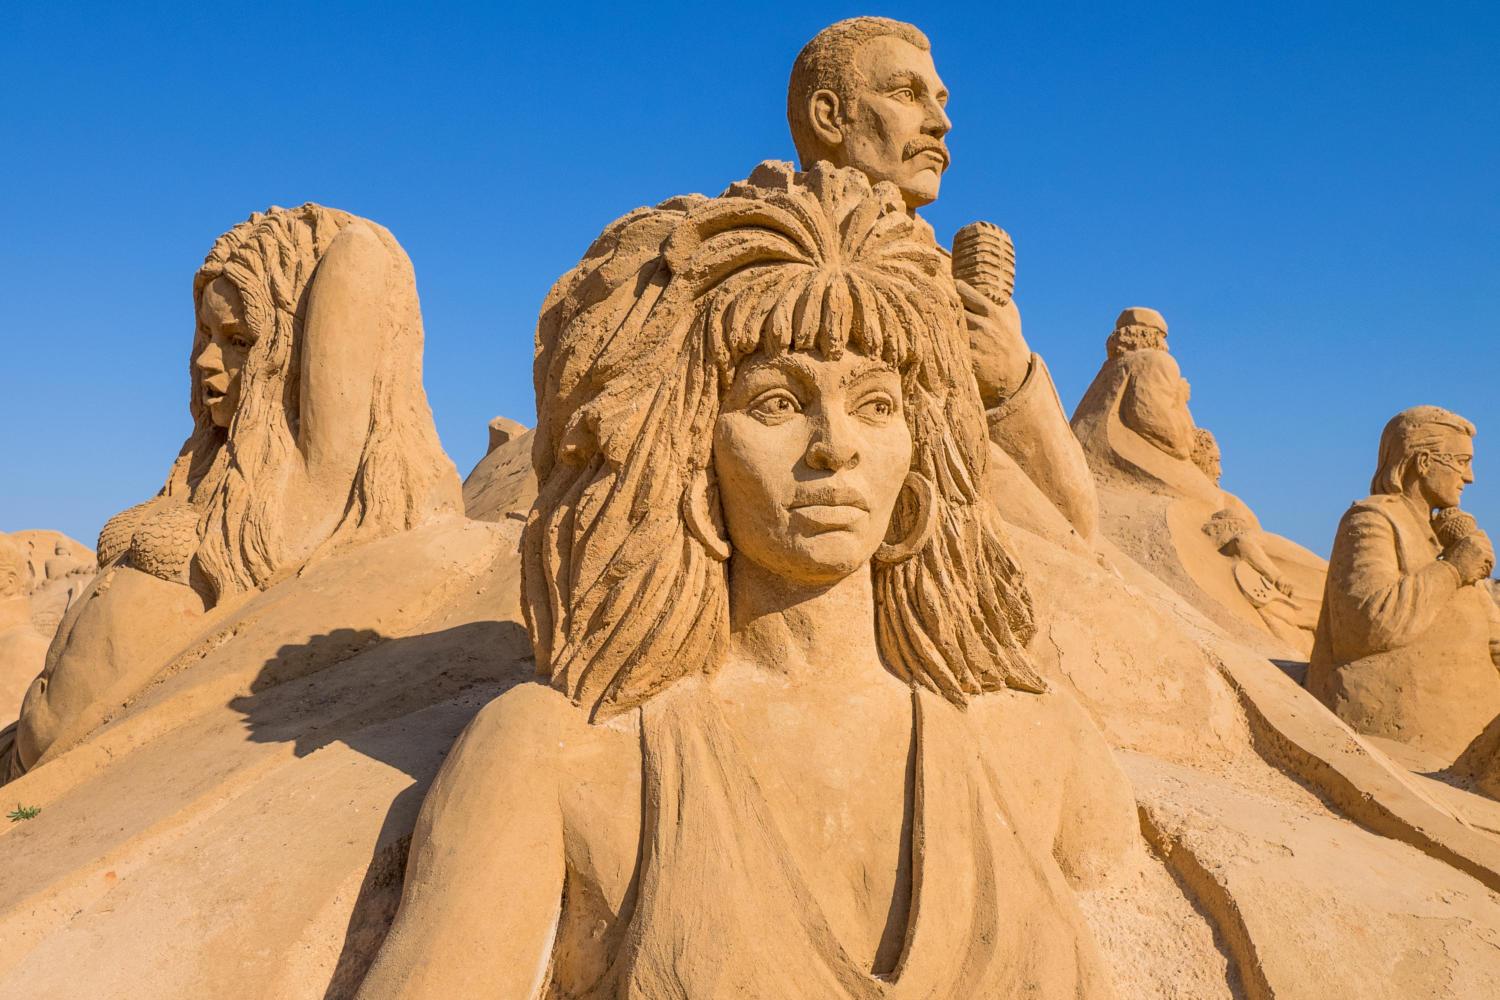 Beyoncé sand sculpture at the Fiesa 2015 International Sand Sculpture Festival in Pêra, Portugal